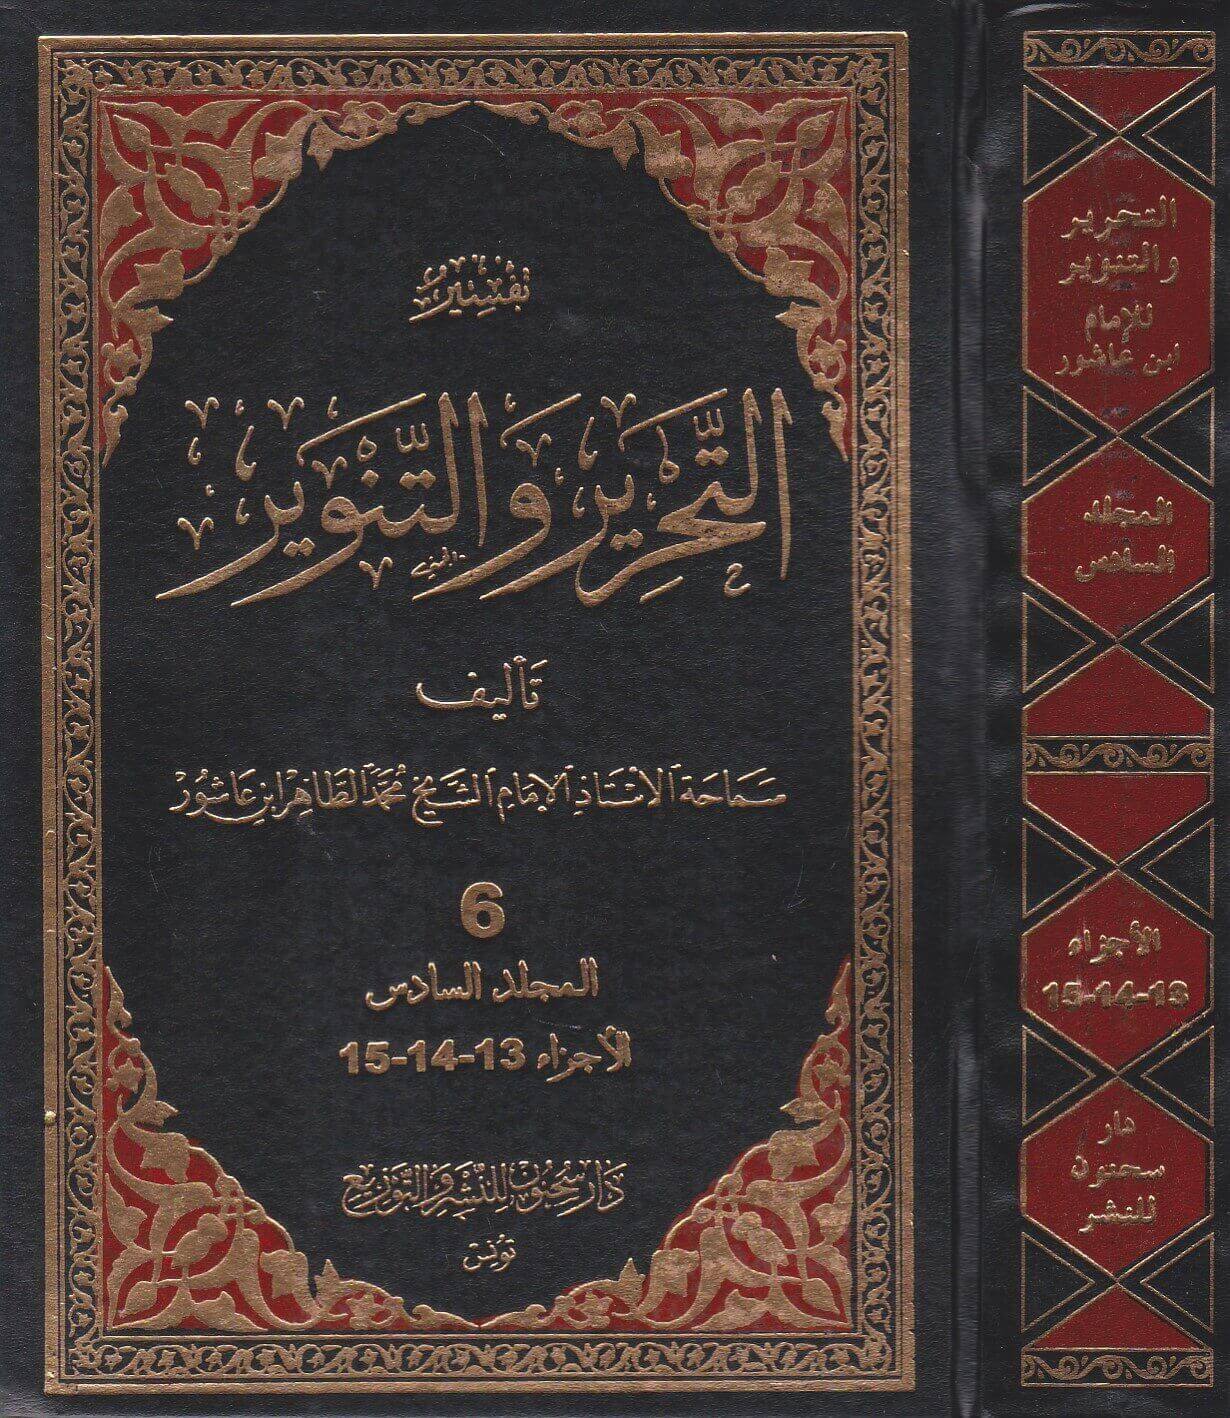 Photo of تحميل كتاب تفسير التحرير والتنوير pdf لـ محمد الطاهر بن عاشور